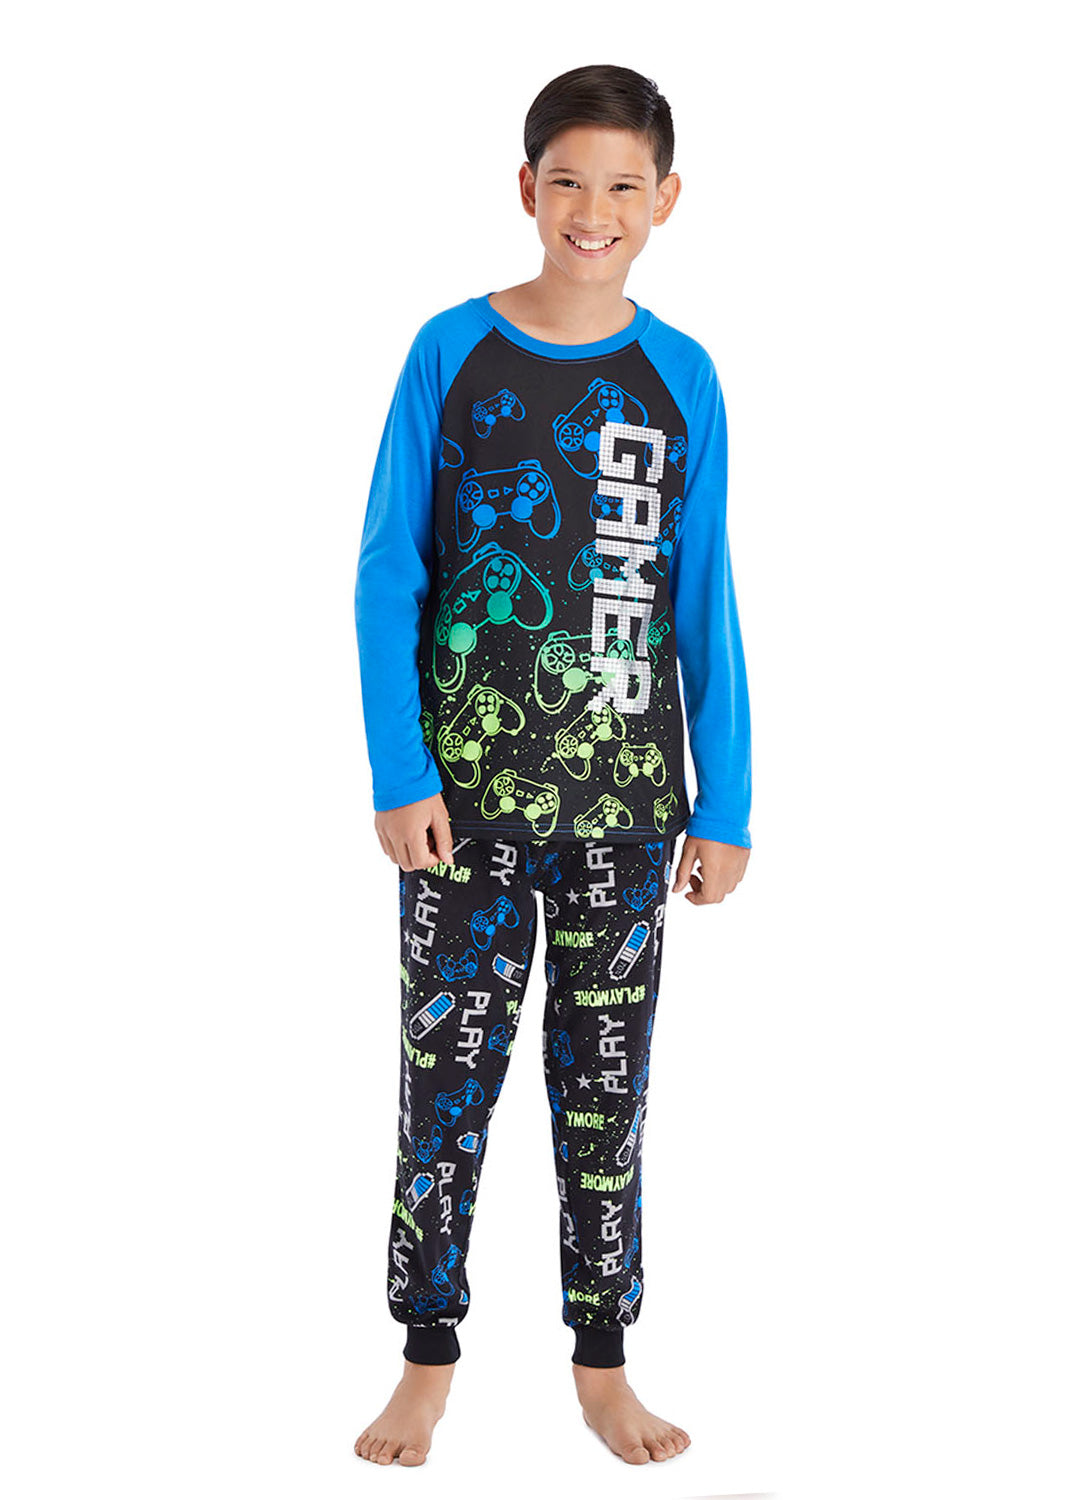 Boy wearing a Gamer Pajama Set in Royal colour